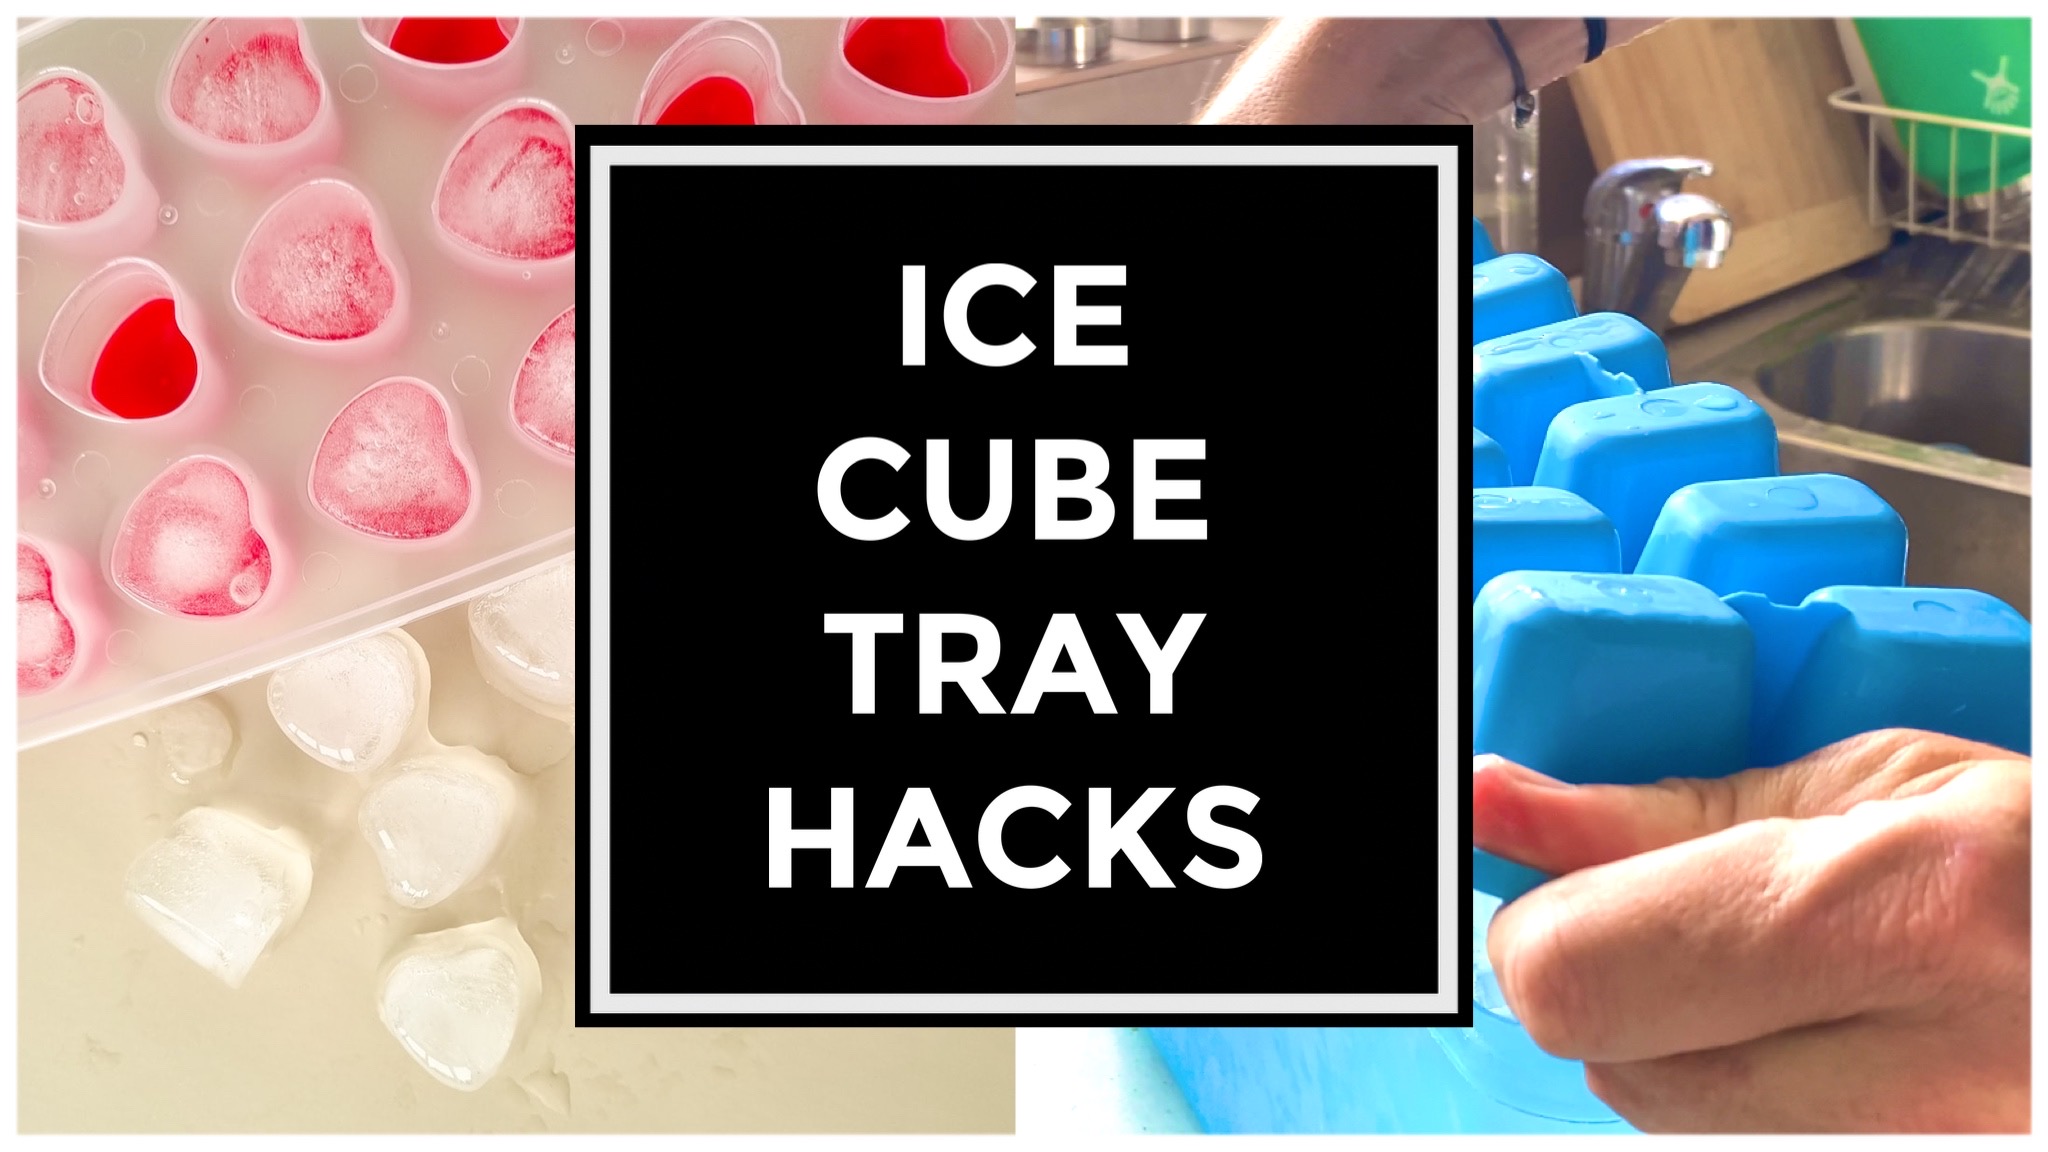 https://huntingwaterfalls.com/wp-content/uploads/2022/02/ice-cube-tray-hacks.jpg